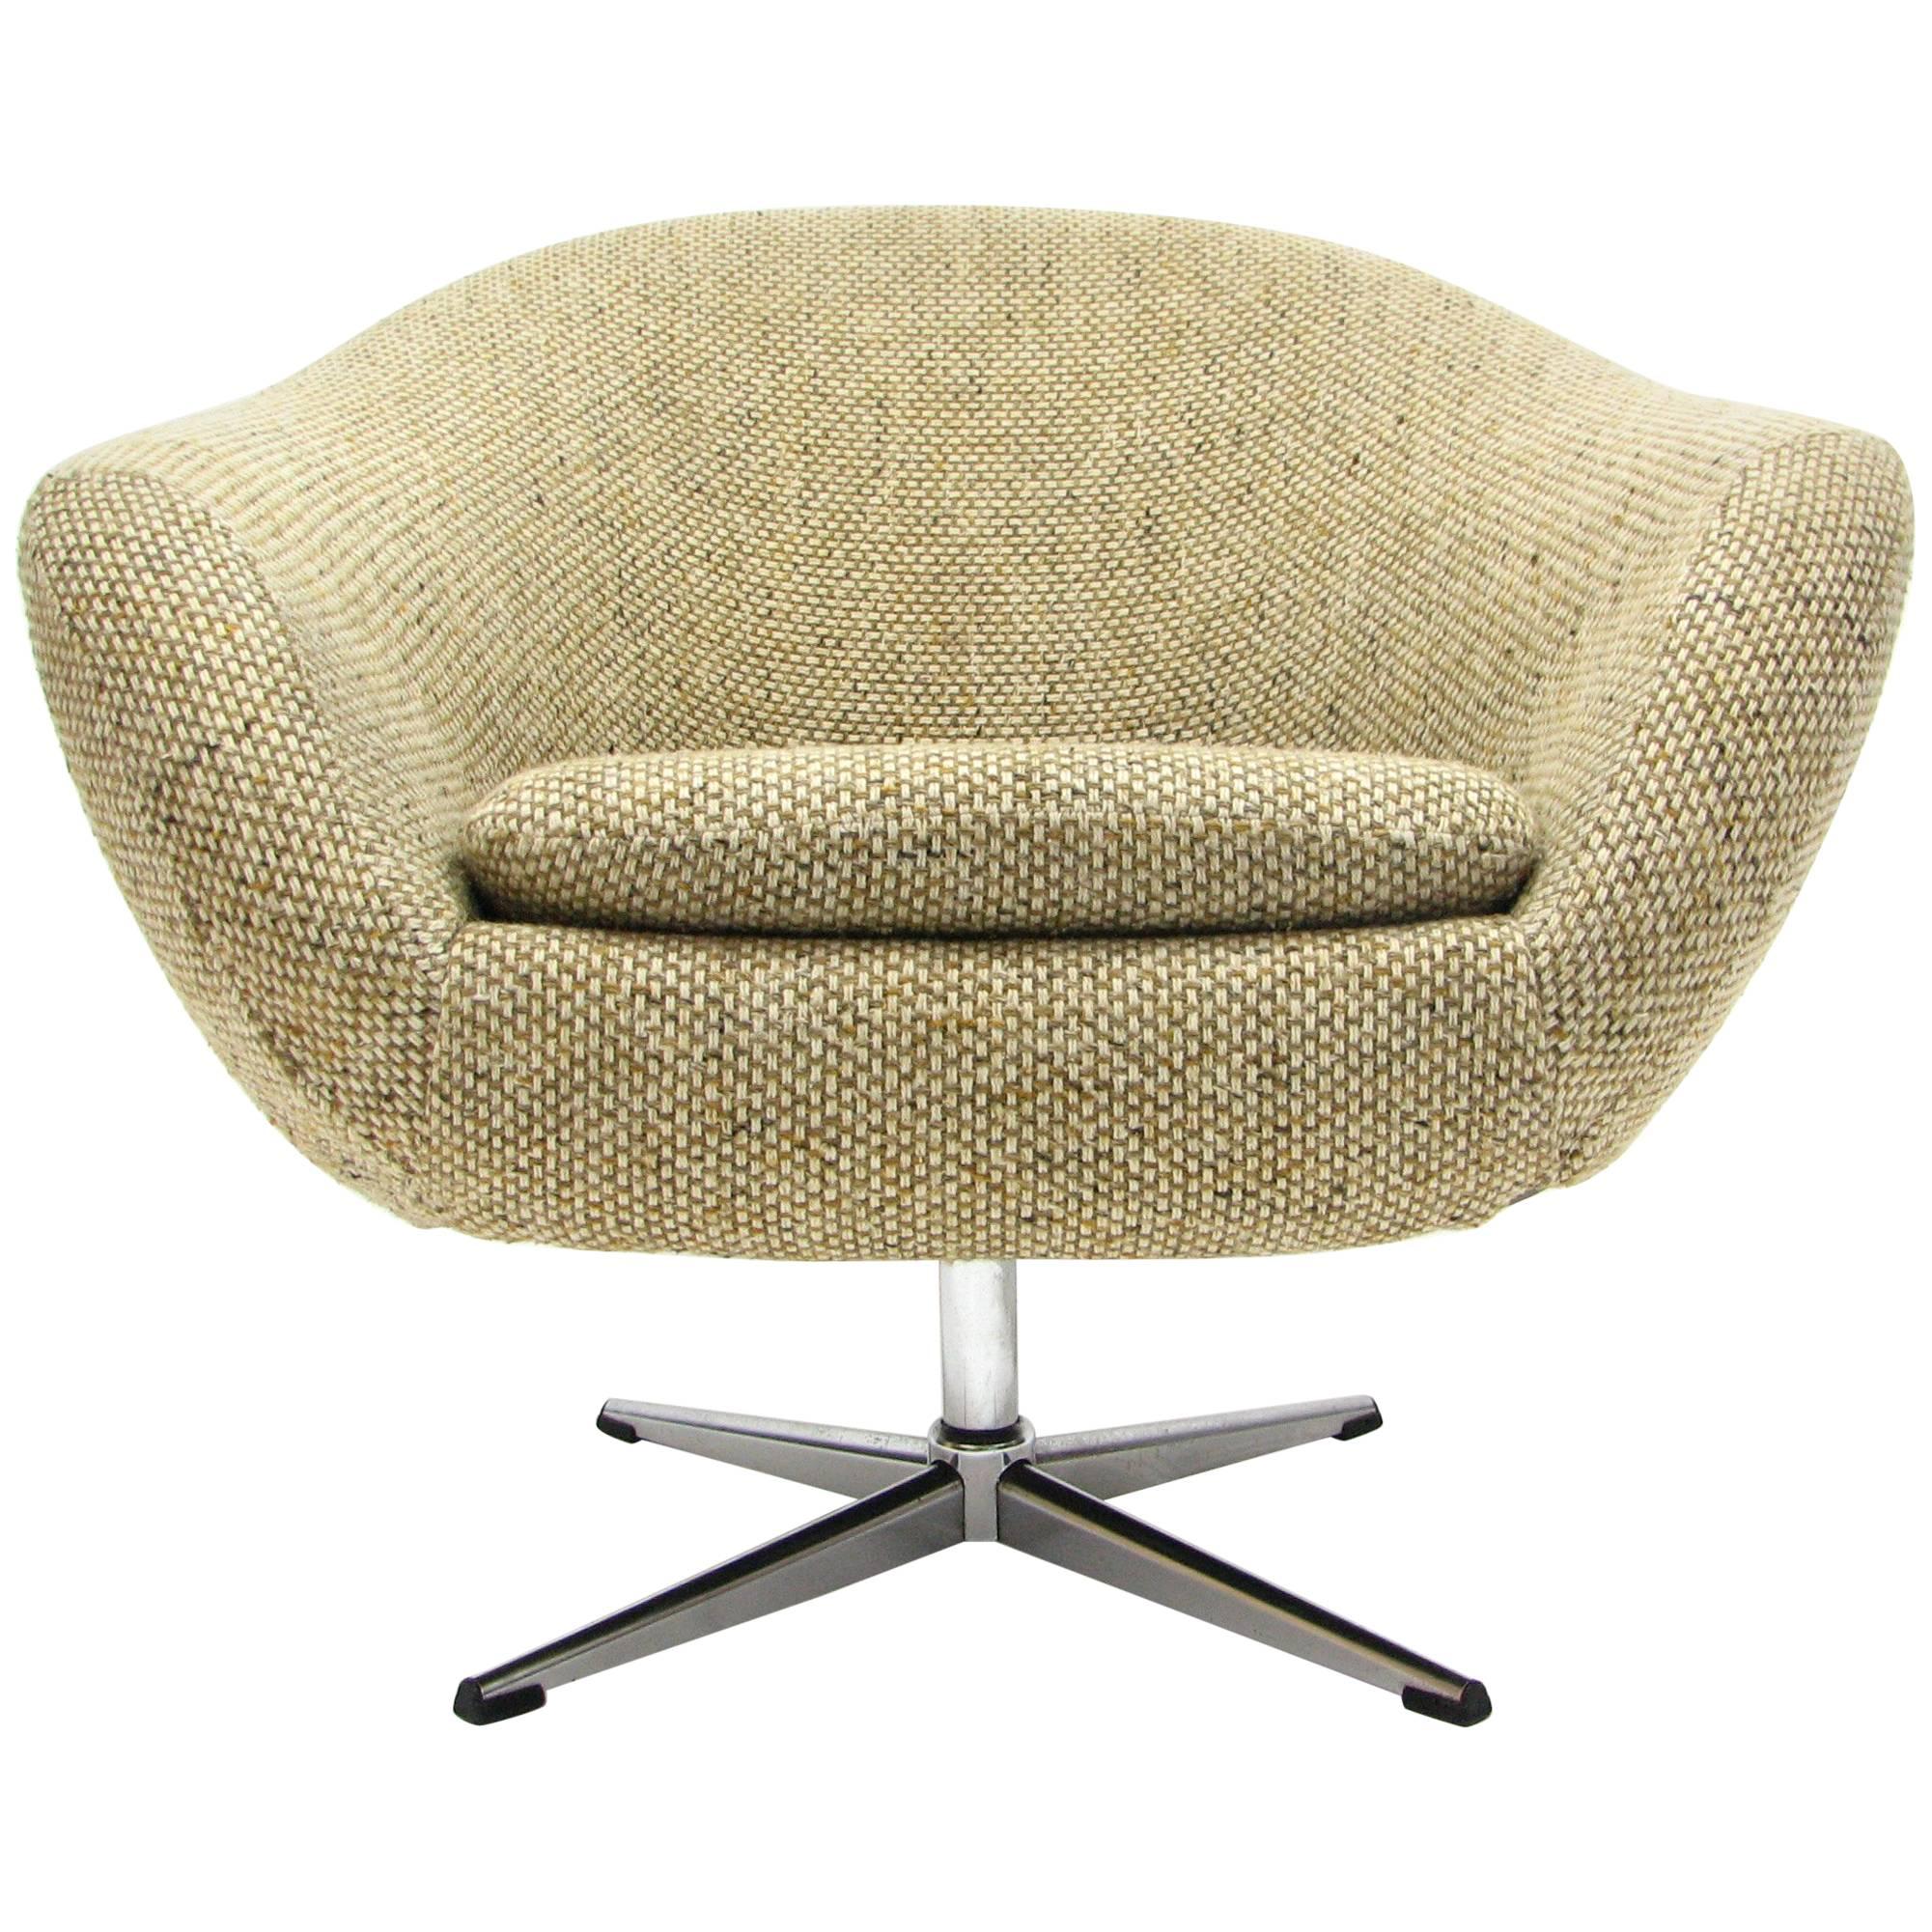 Overman Swivel Chair in Original 1970s Beautiful Tweed Upholstery